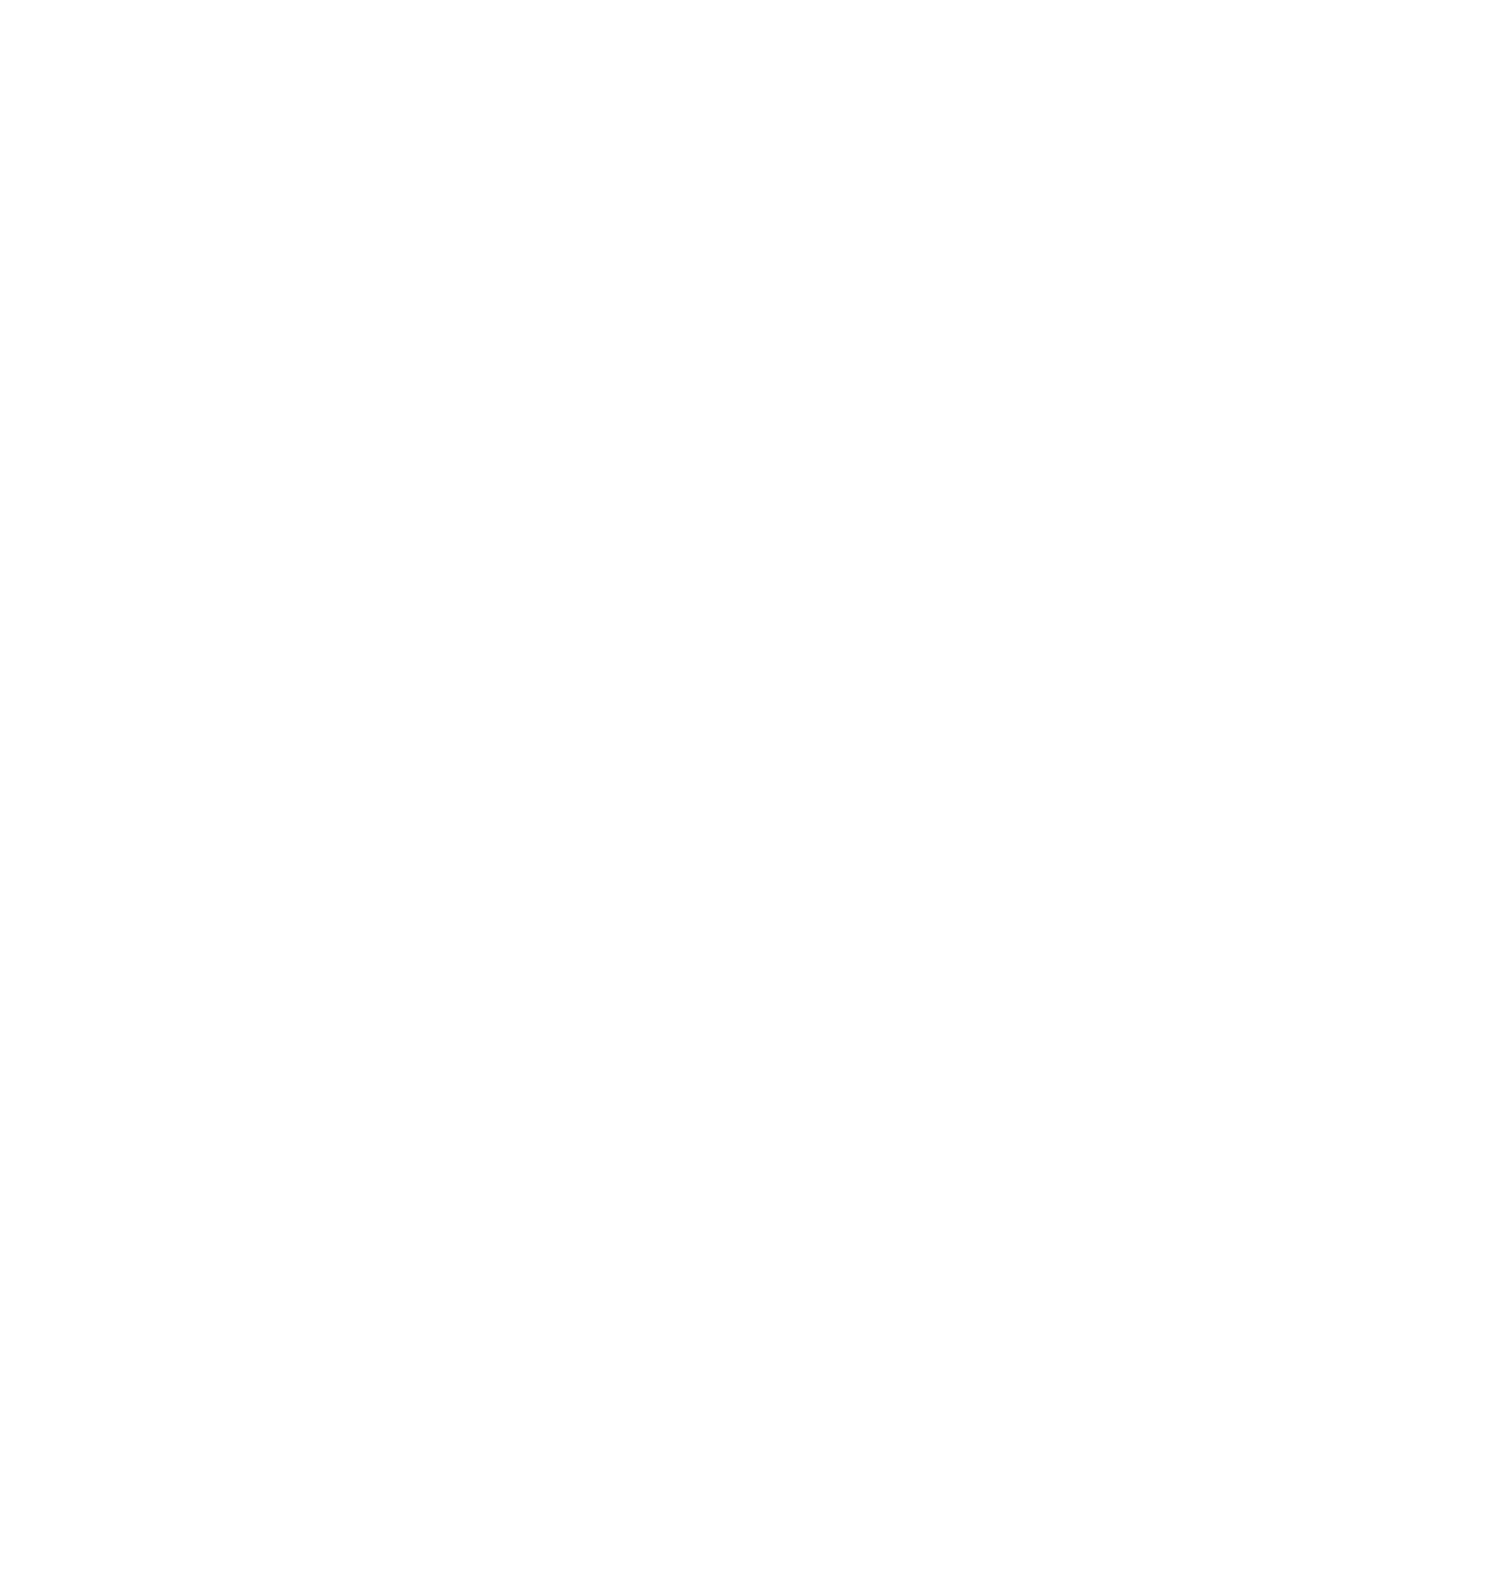 Ultra Electronics logo for dark backgrounds (transparent PNG)